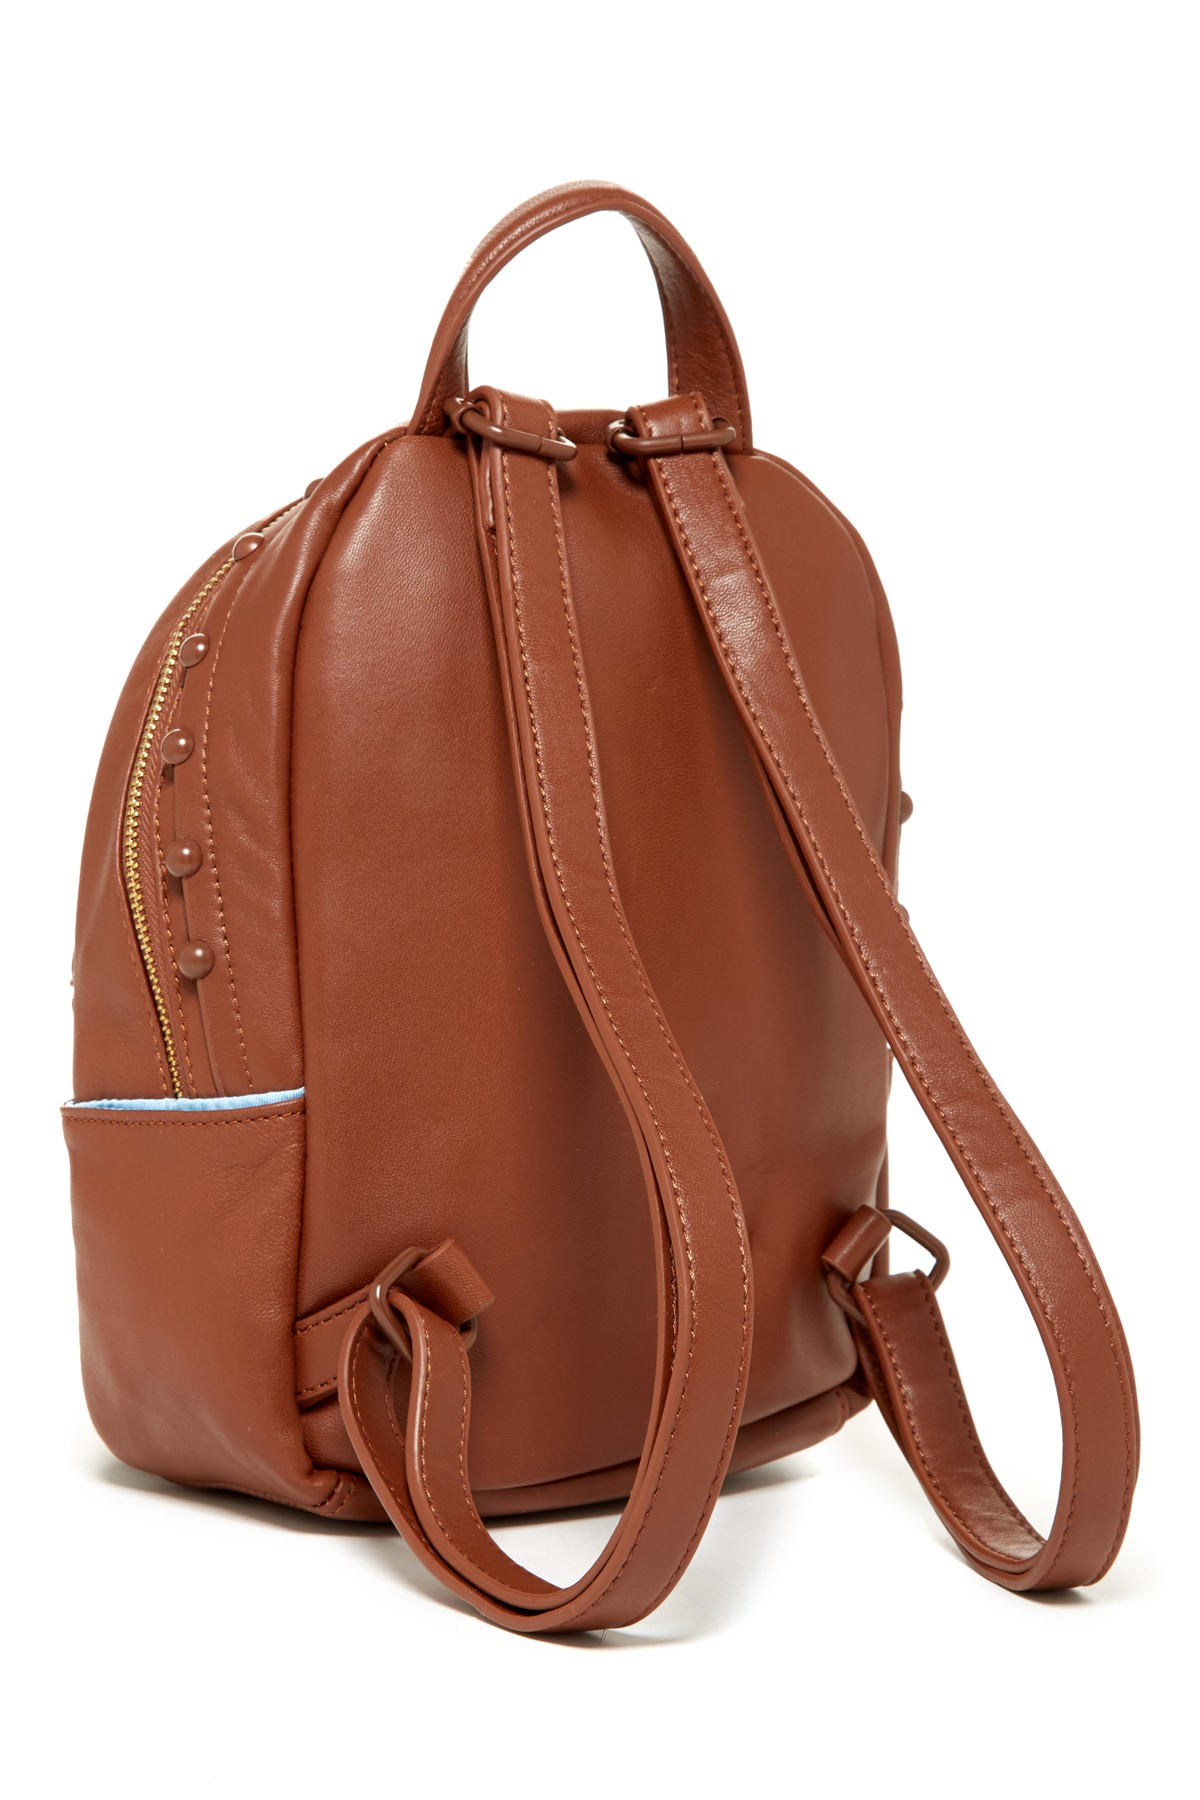 Cynthia Rowley Tabitha Leather Mini Backpack in Brown - Lyst